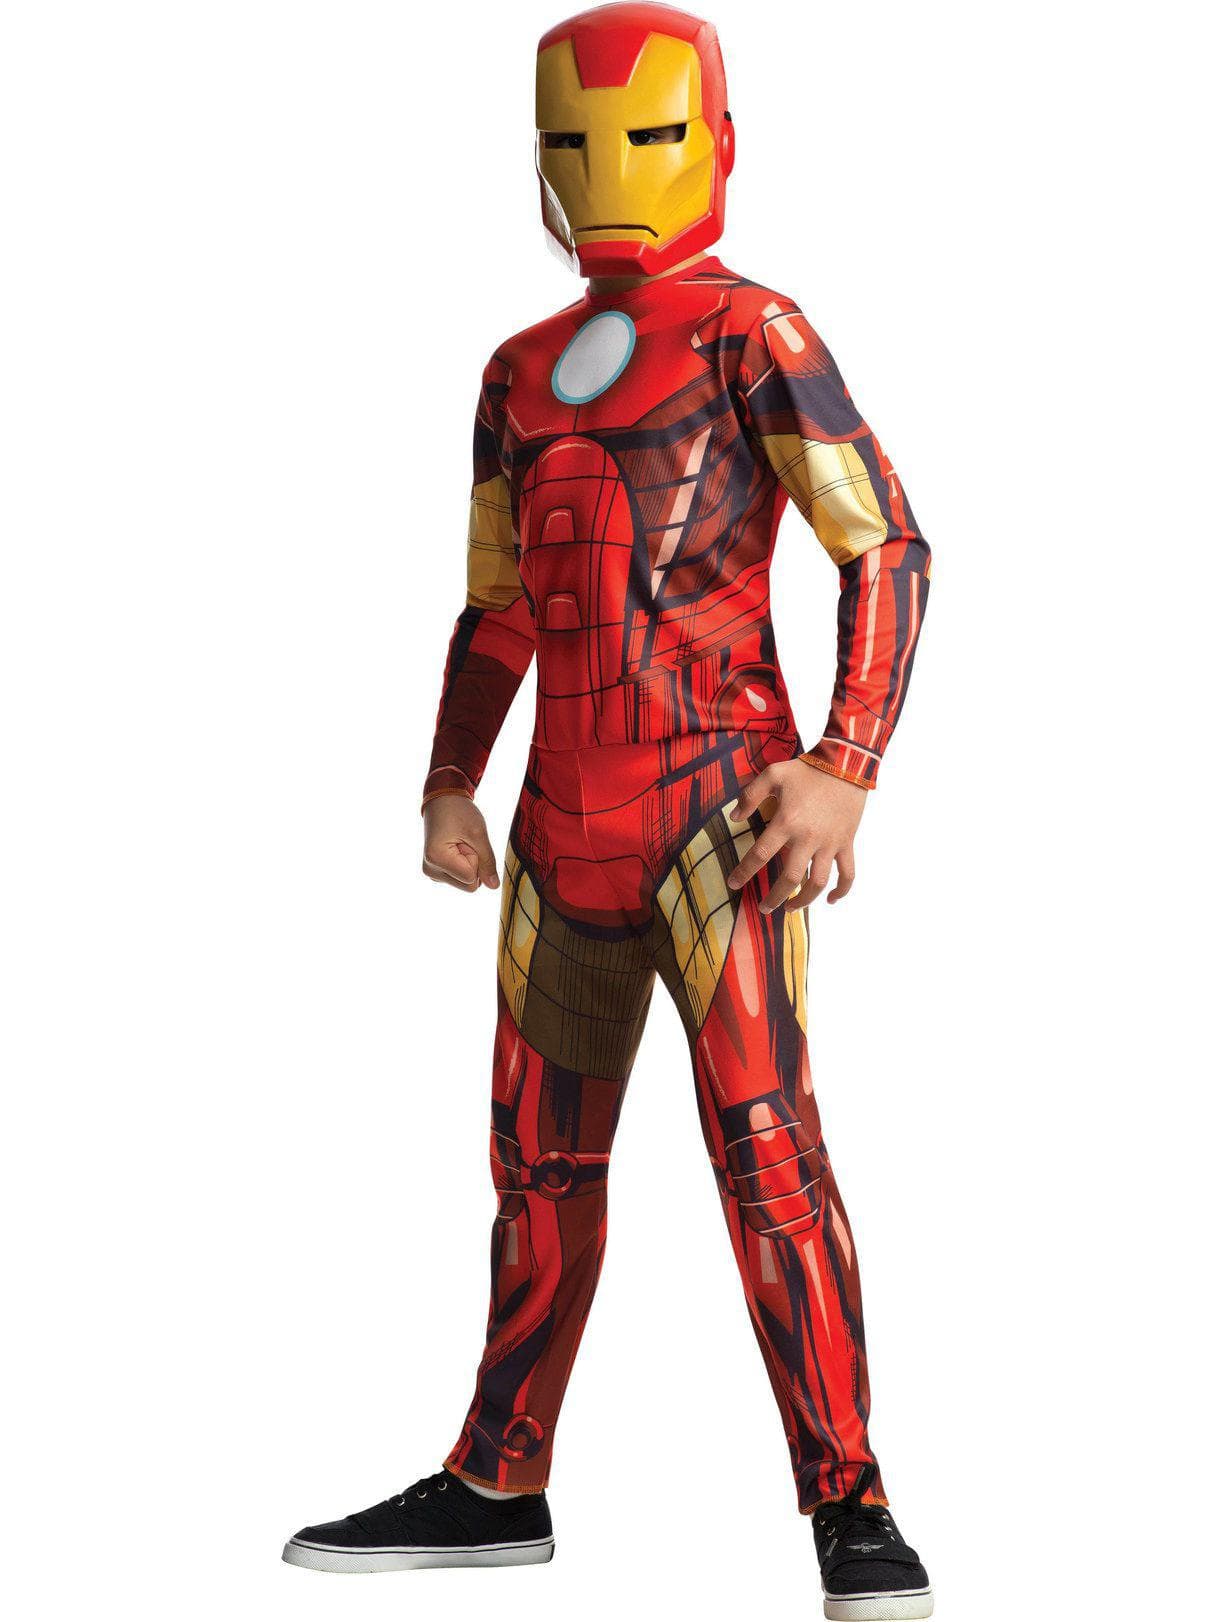 Kids Avengers Iron Man Costume - costumes.com